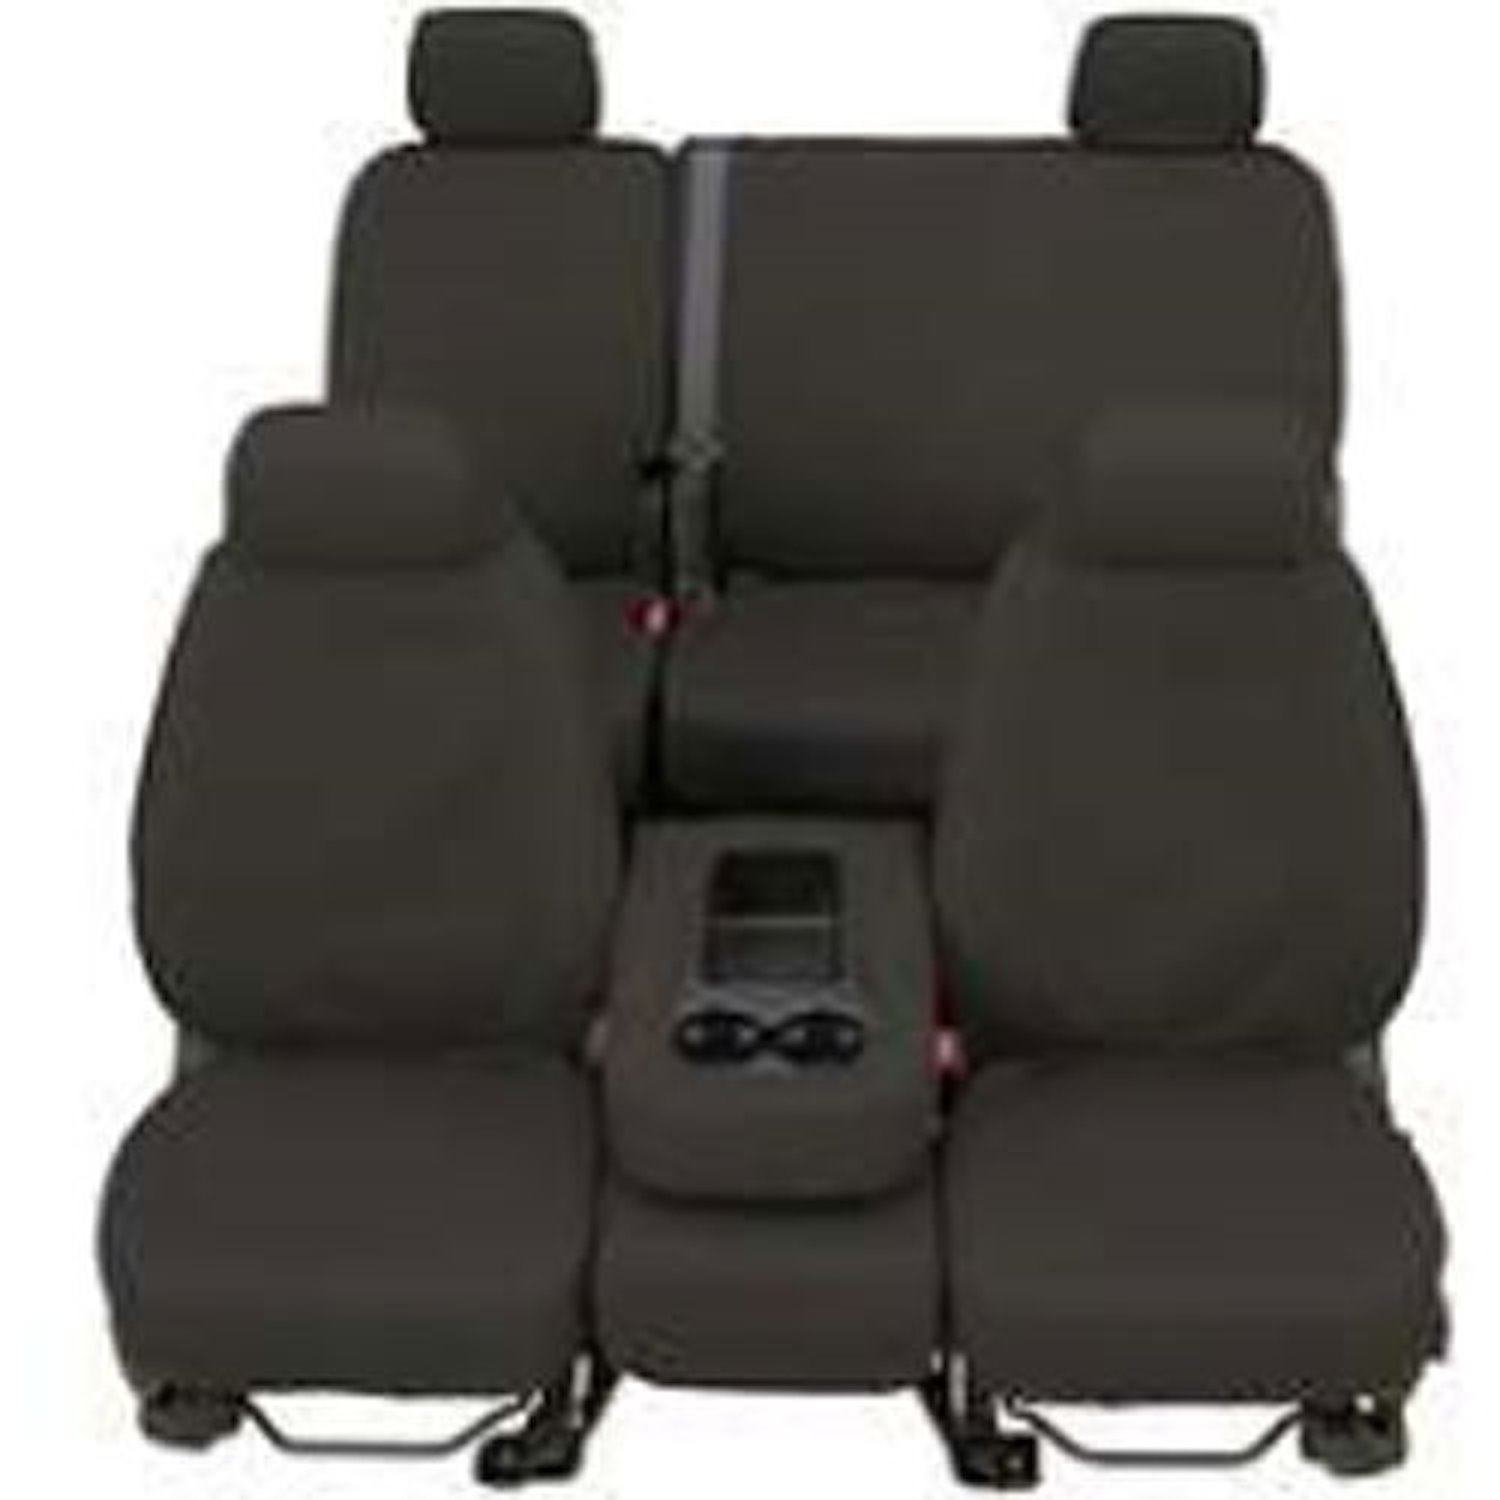 SeatSaver Seat Cover 40/60 Fold Up Seat Cushion